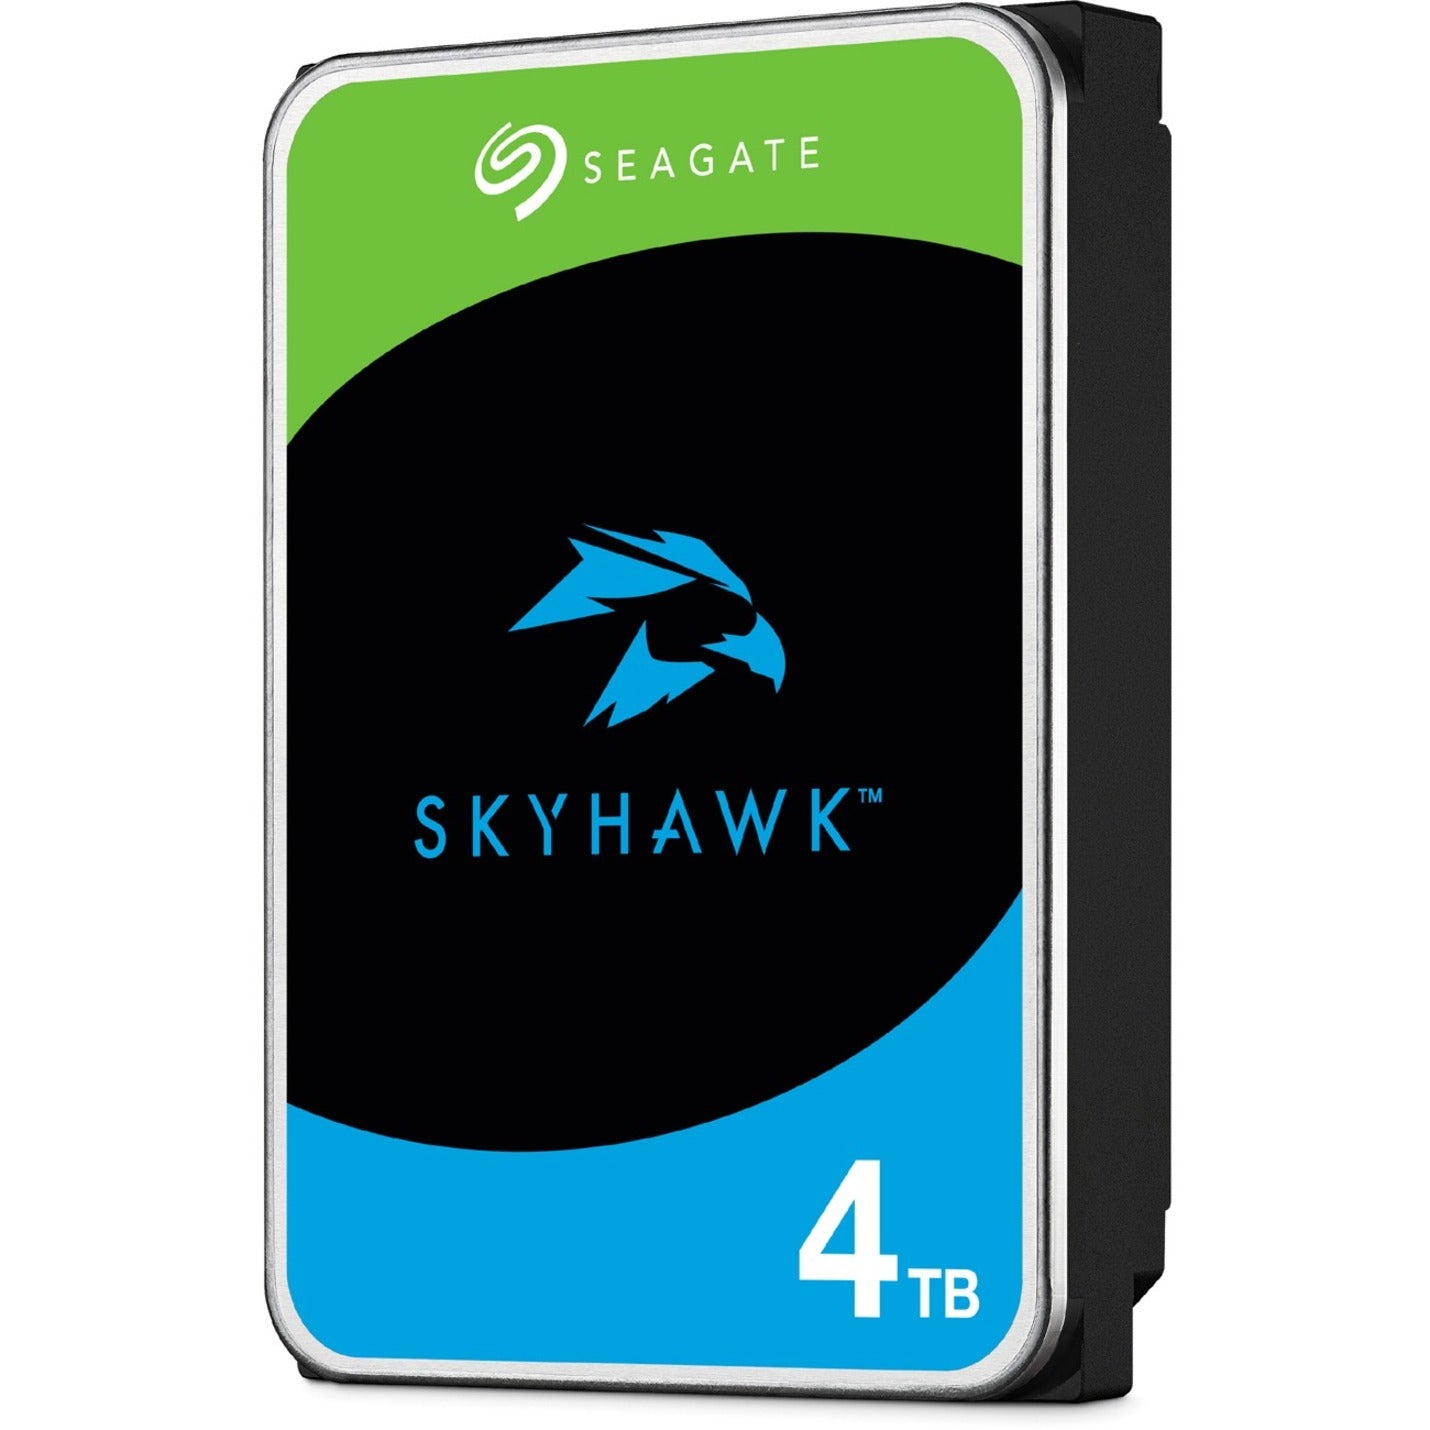 Seagate-IMSourcing ST4000VX007 SkyHawk 4TB Hard Drive, Internal SATA 600, Video Surveillance HDD